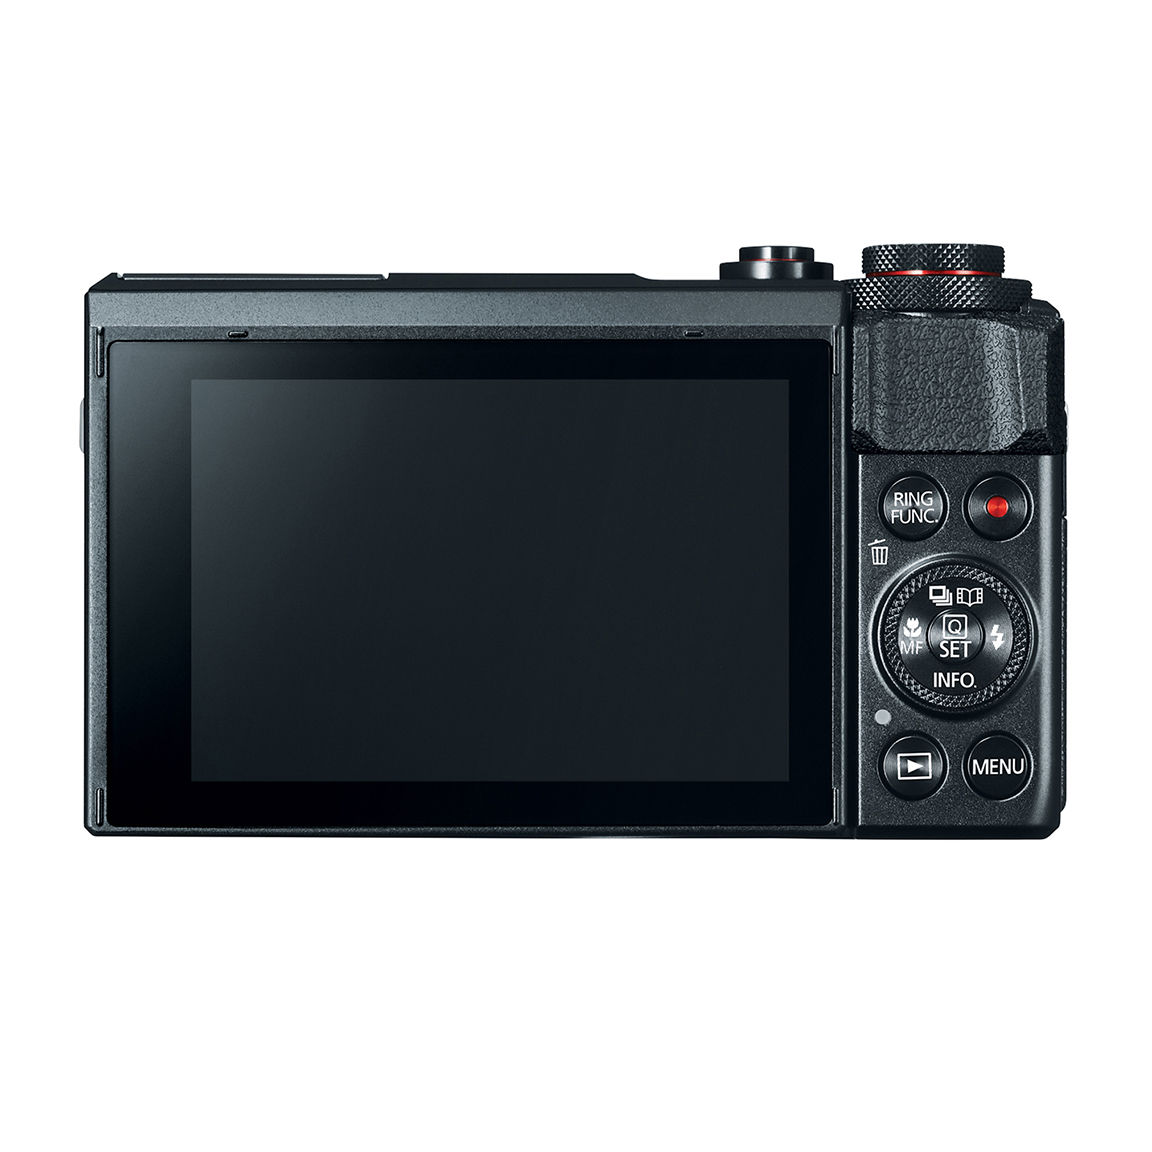 Canon PowerShot G7X Mark II 20.1MP 1" 4.2X 3"Tilt